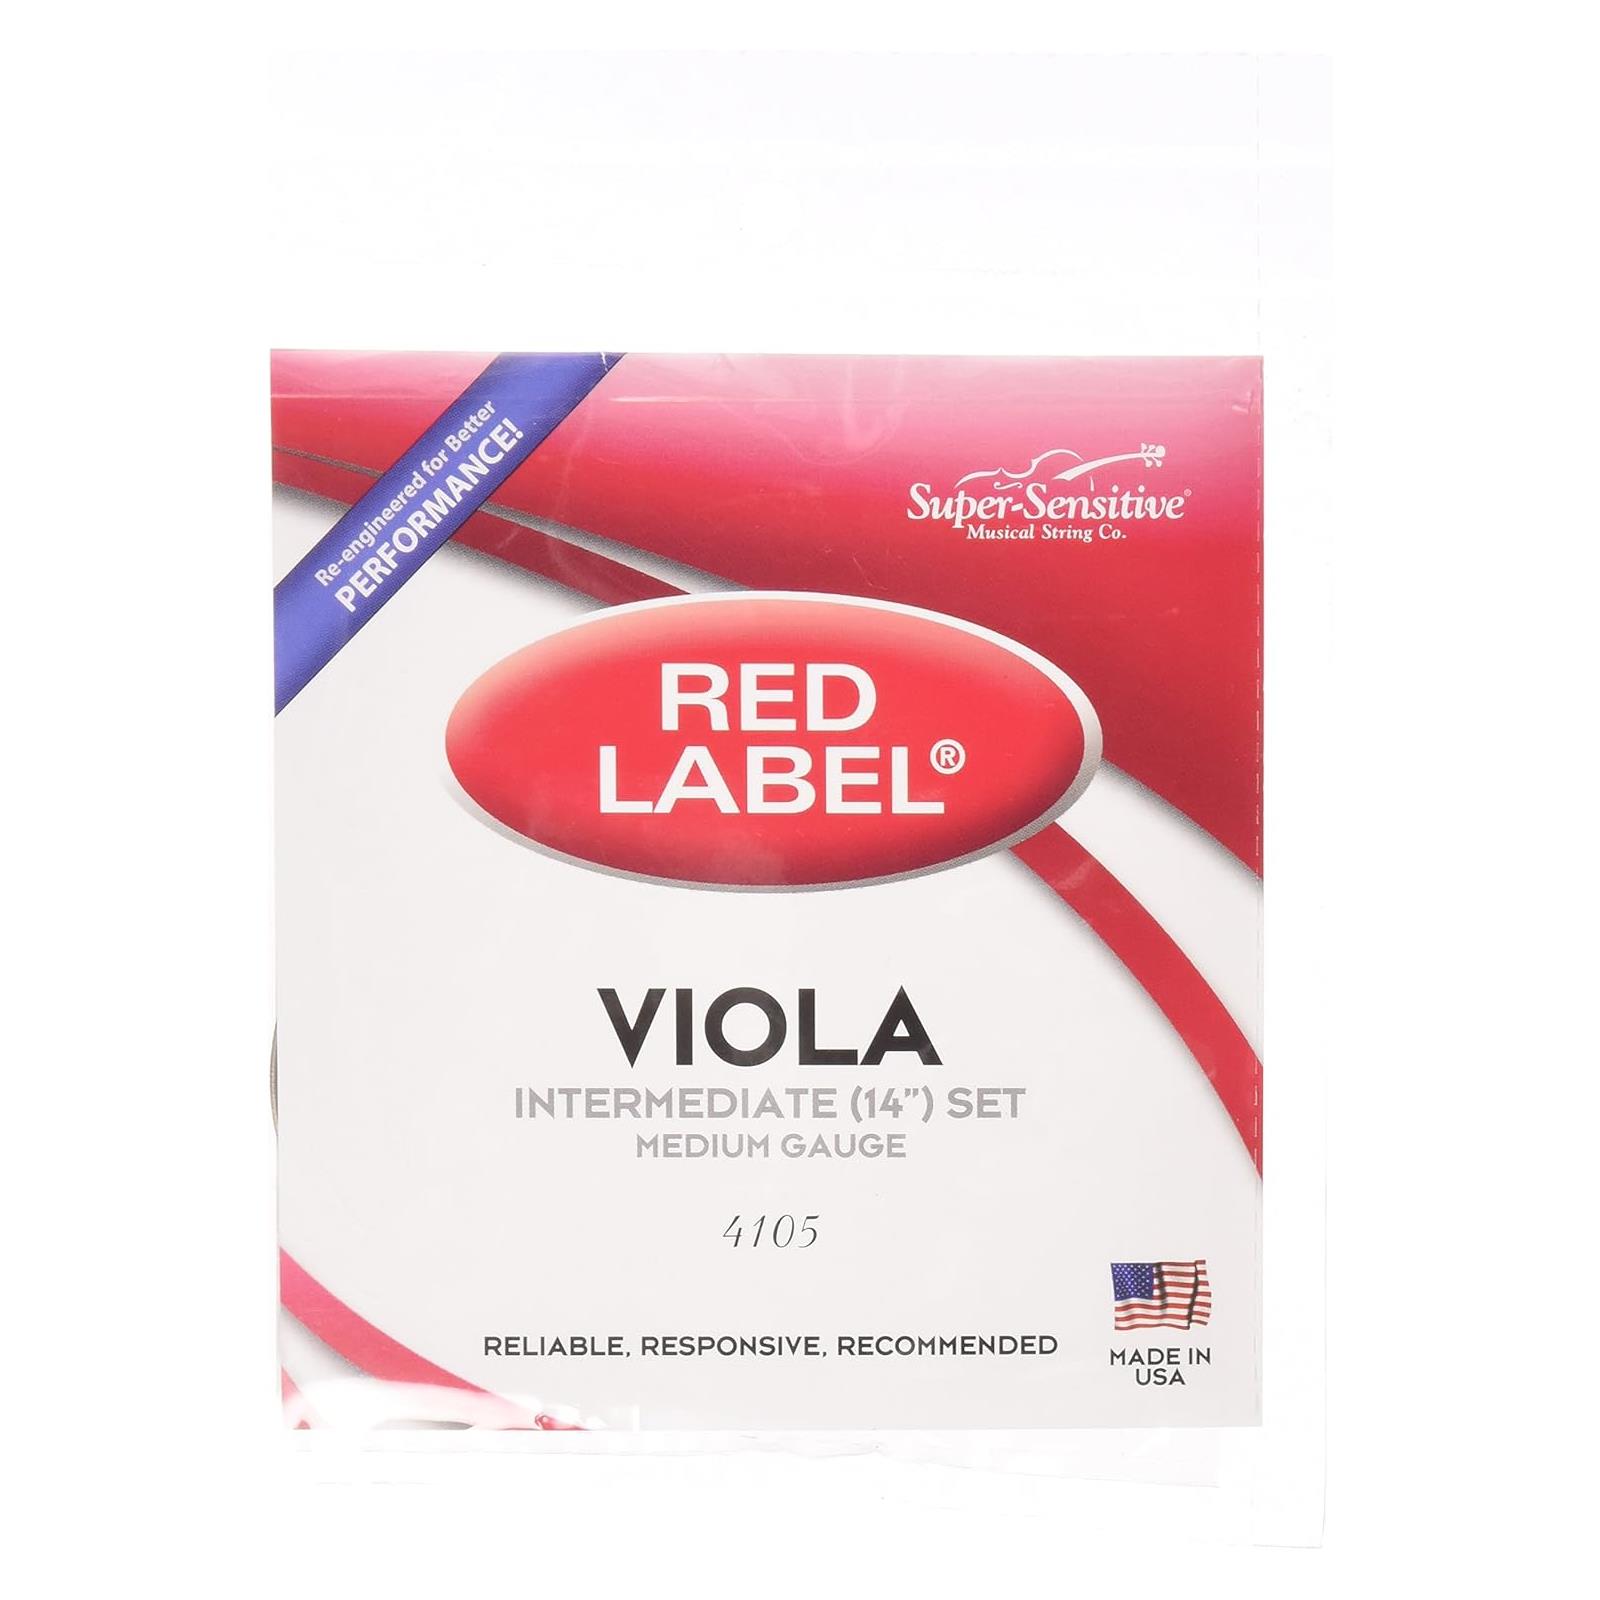 Super-Sensitive Red Label Viola Single C String, 14" Scale